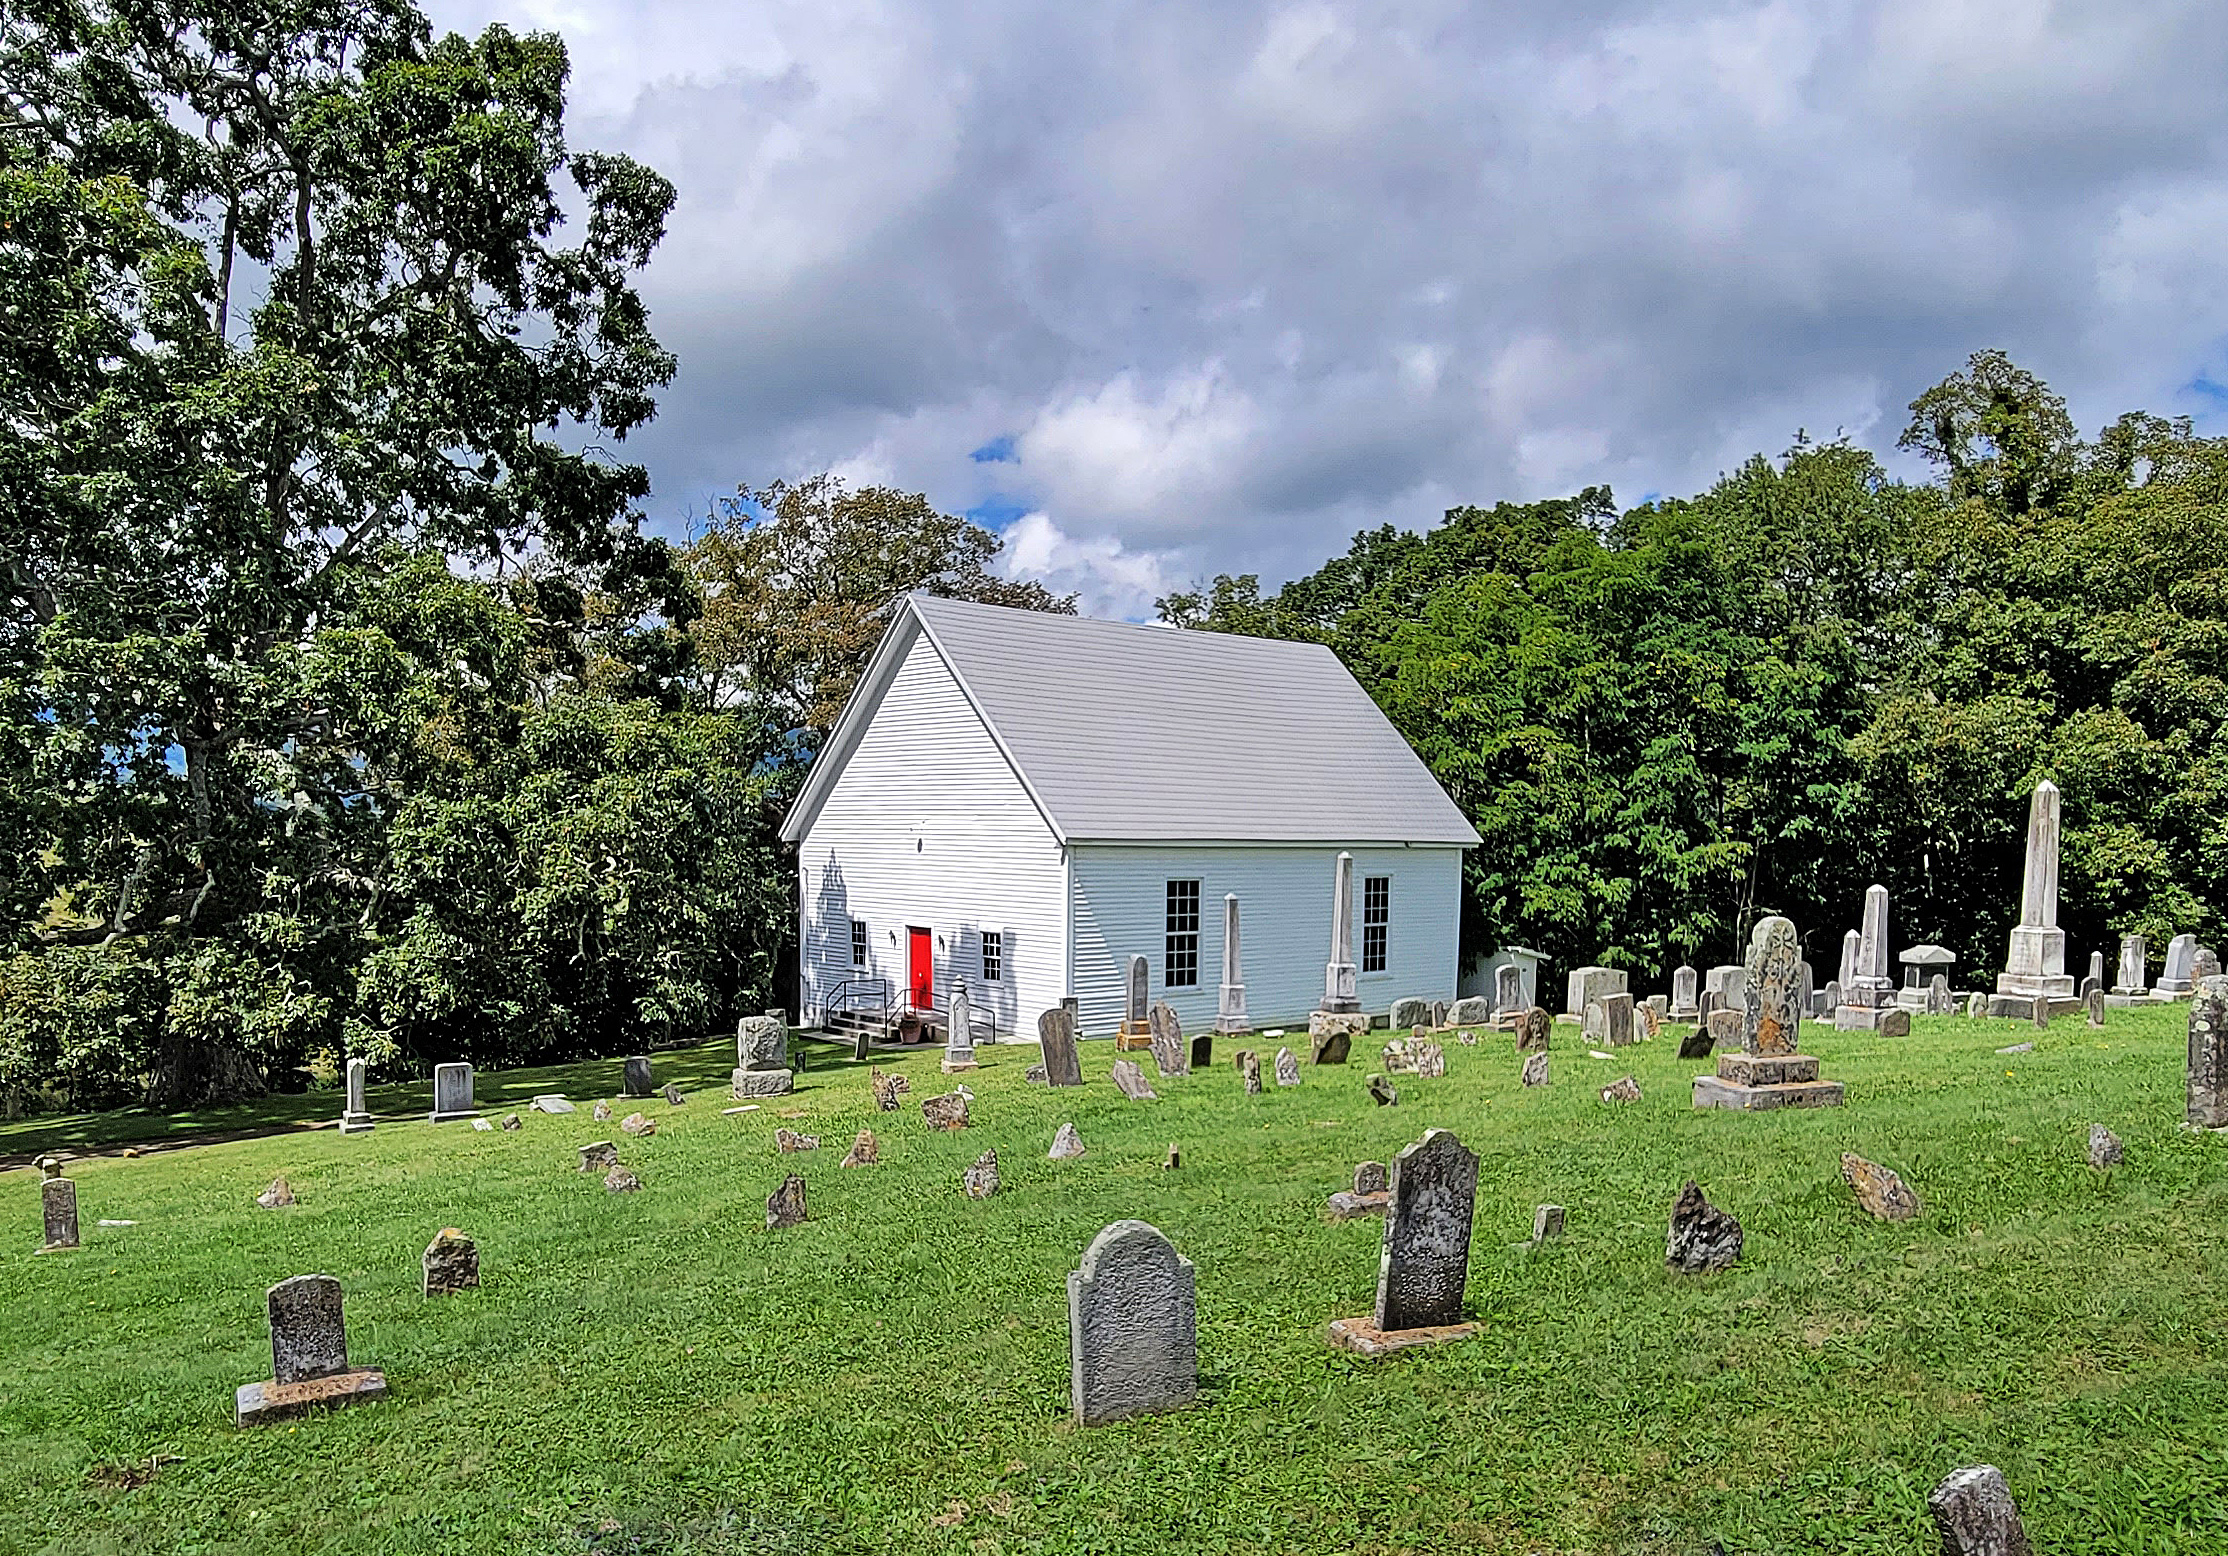 Burke's Garden Central Church and Cemetery